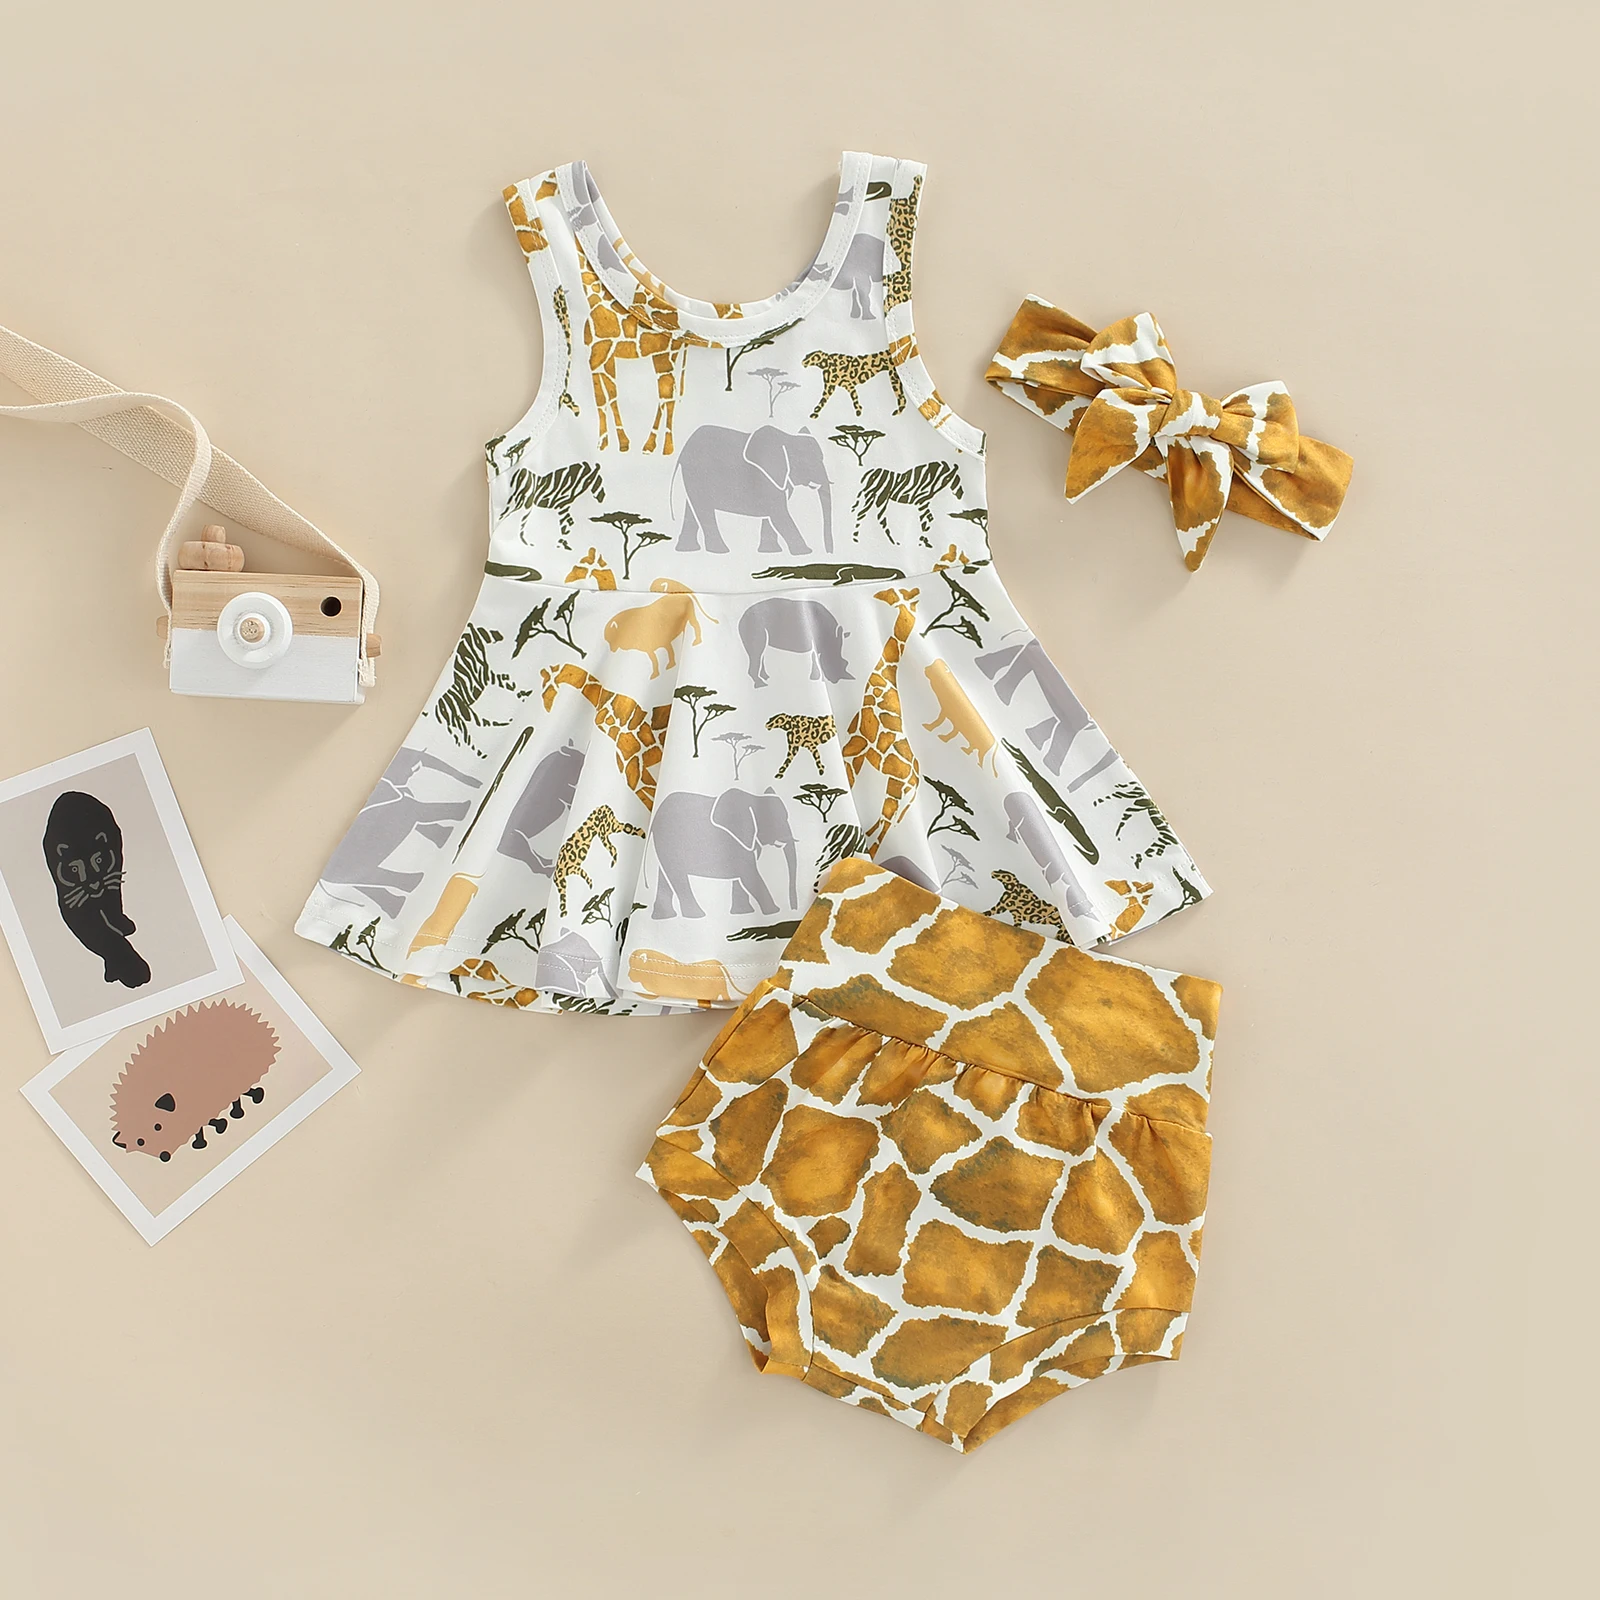 2022 0-24M Cute Baby Girls Summer Outfits Animal Zoo Print Ruffle Tank Sleeveless Tops+Giraffe Pattern Shorts+Headband Set 3pcs baby clothes set gift